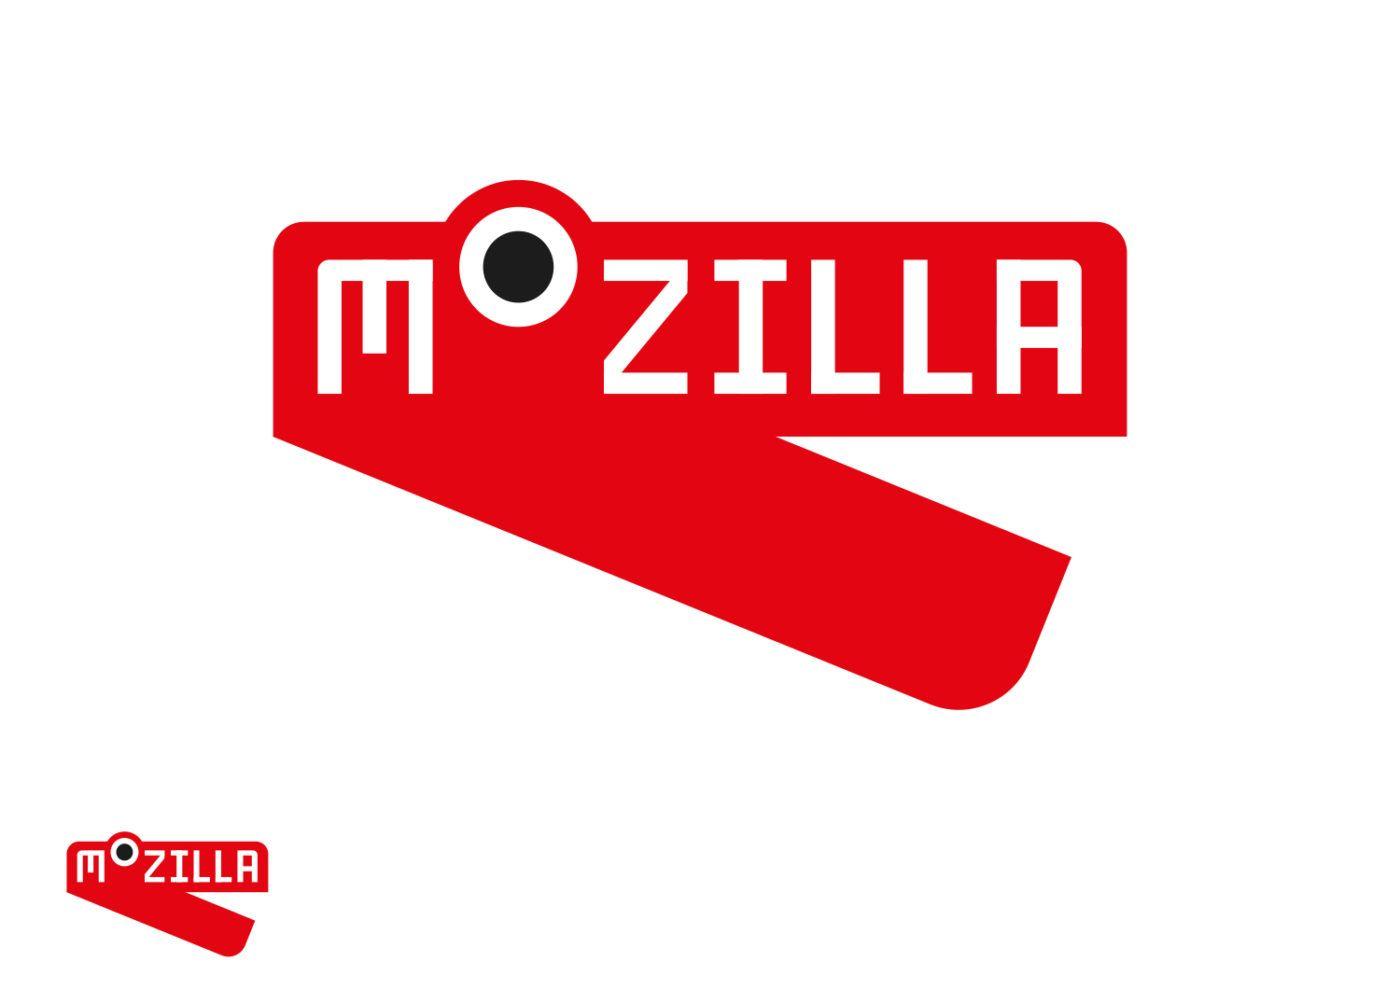 Heart Brand Logo - Mozilla's new logo hopes to show it's at “the heart of the internet ...